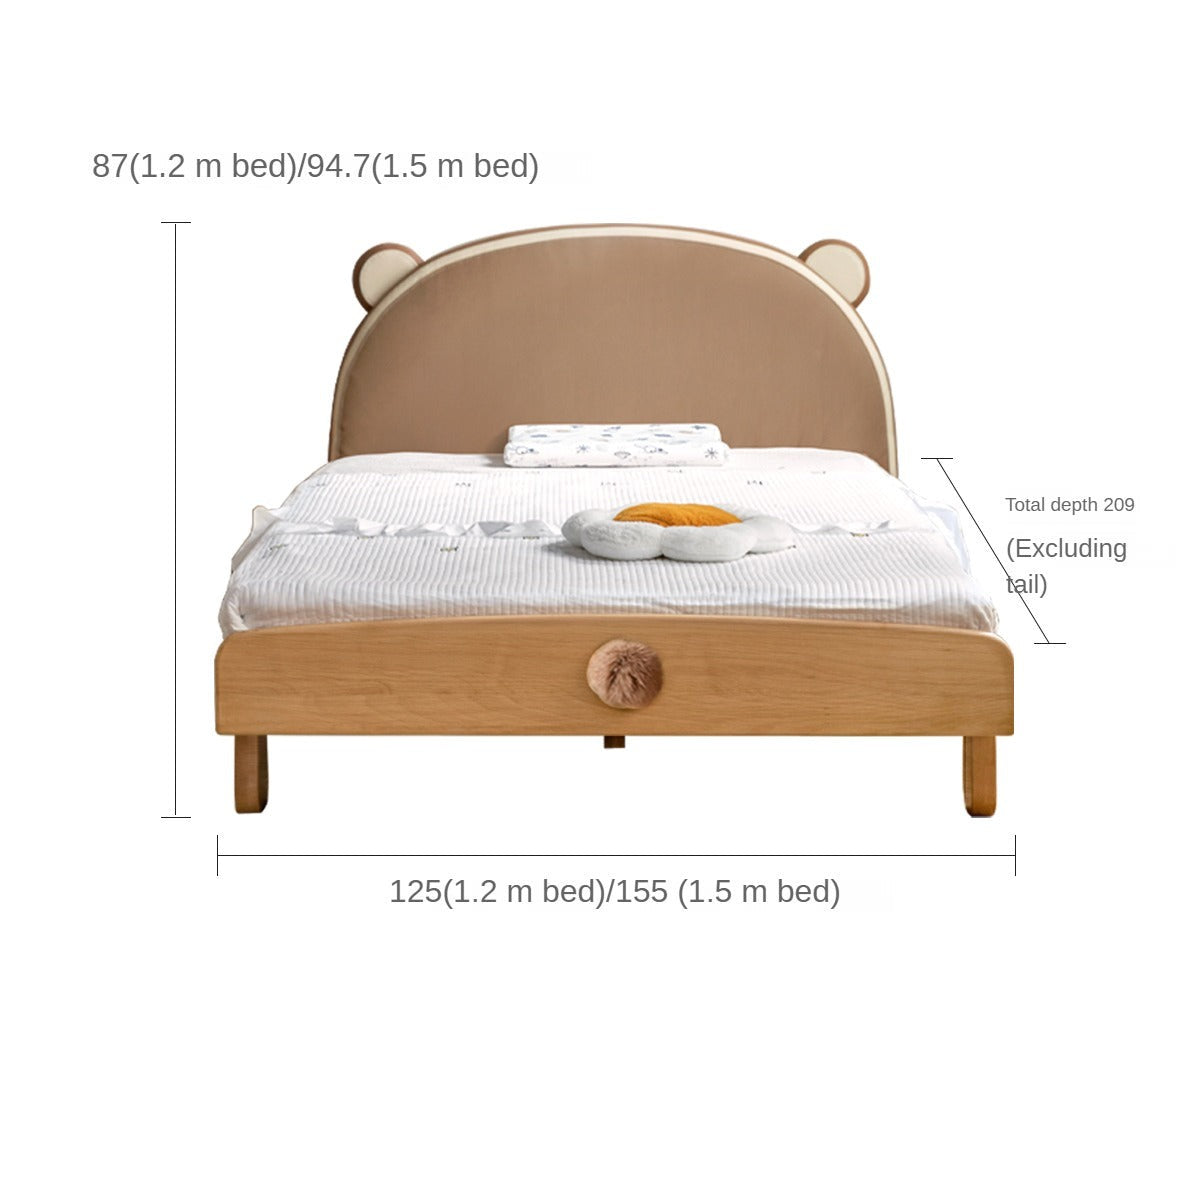 Beech solid wood Bear Box Bed-)